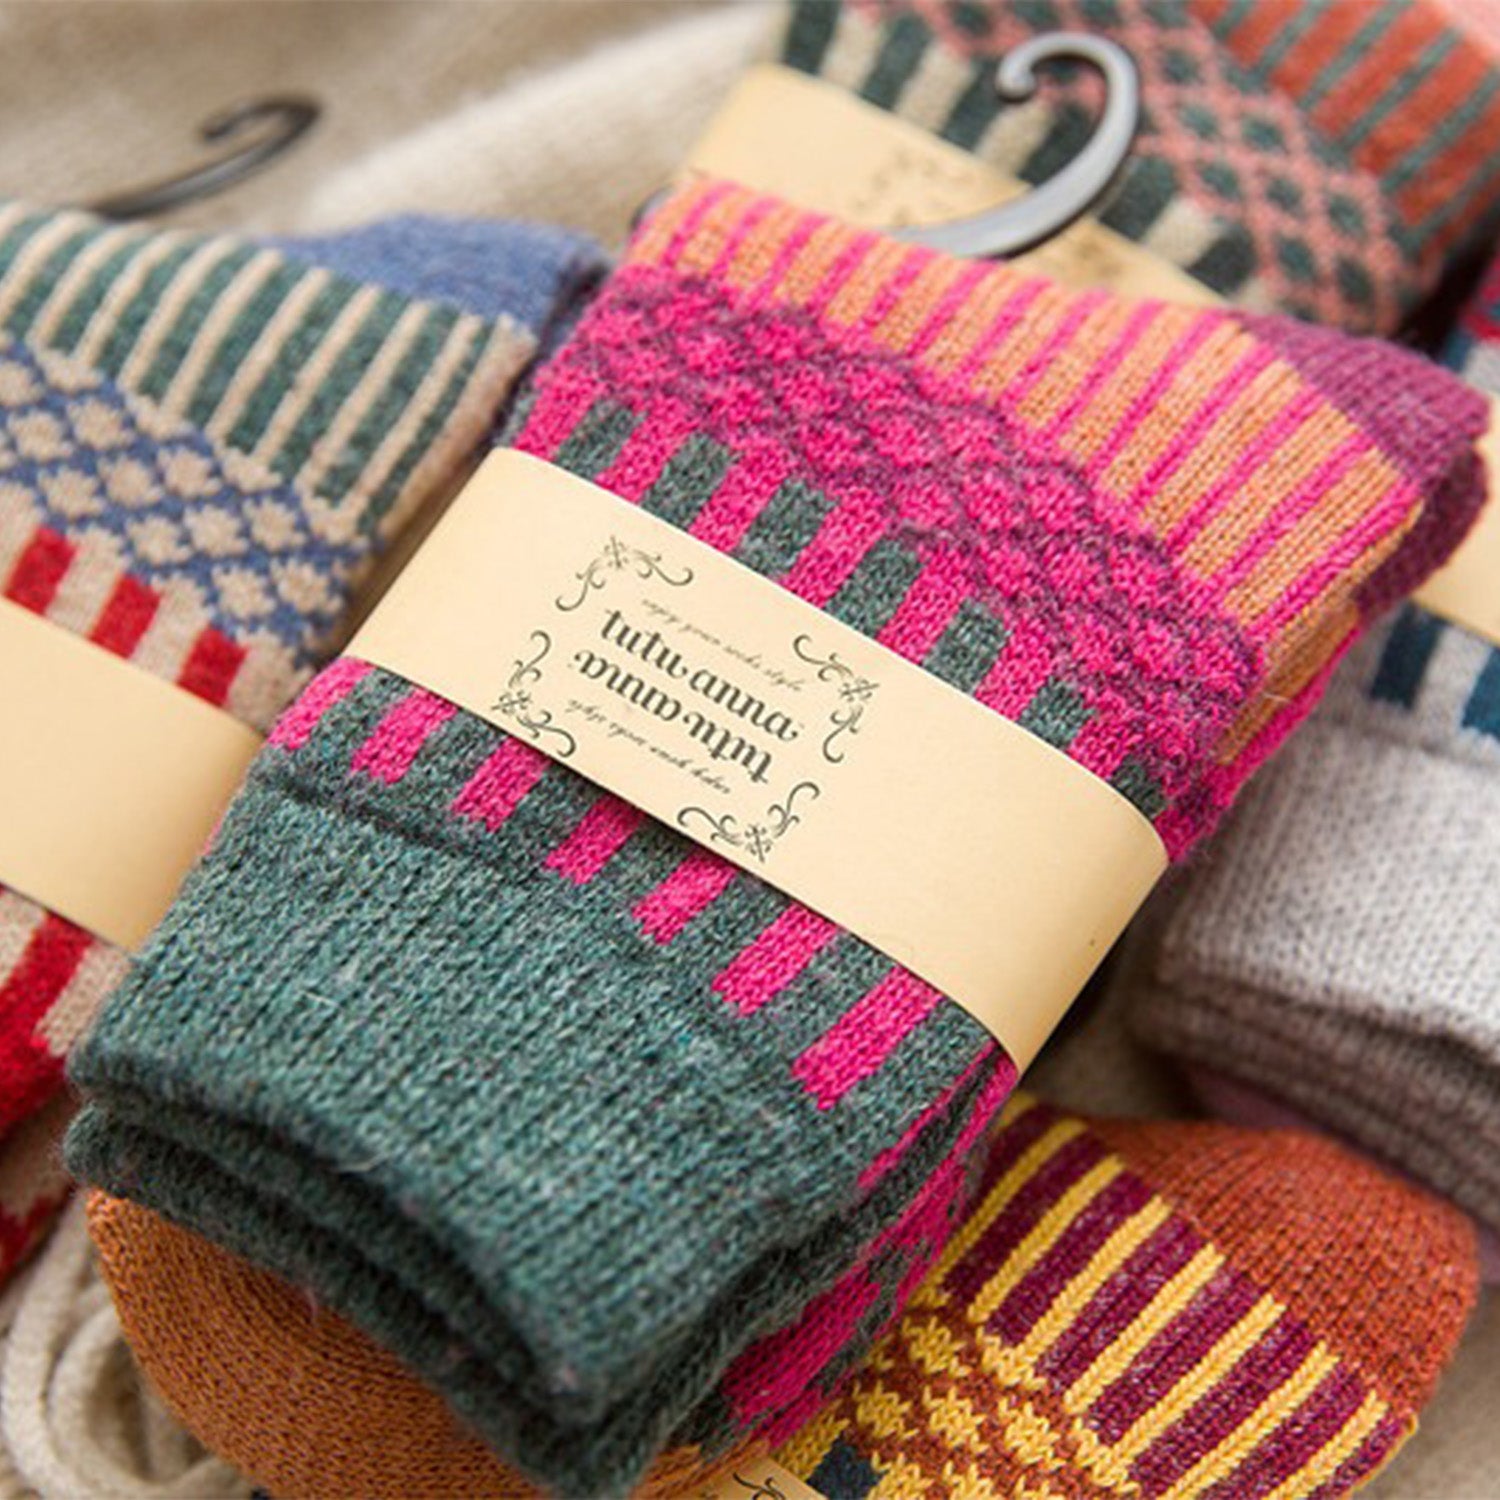 Retro Warm Vertical Stripes Socks